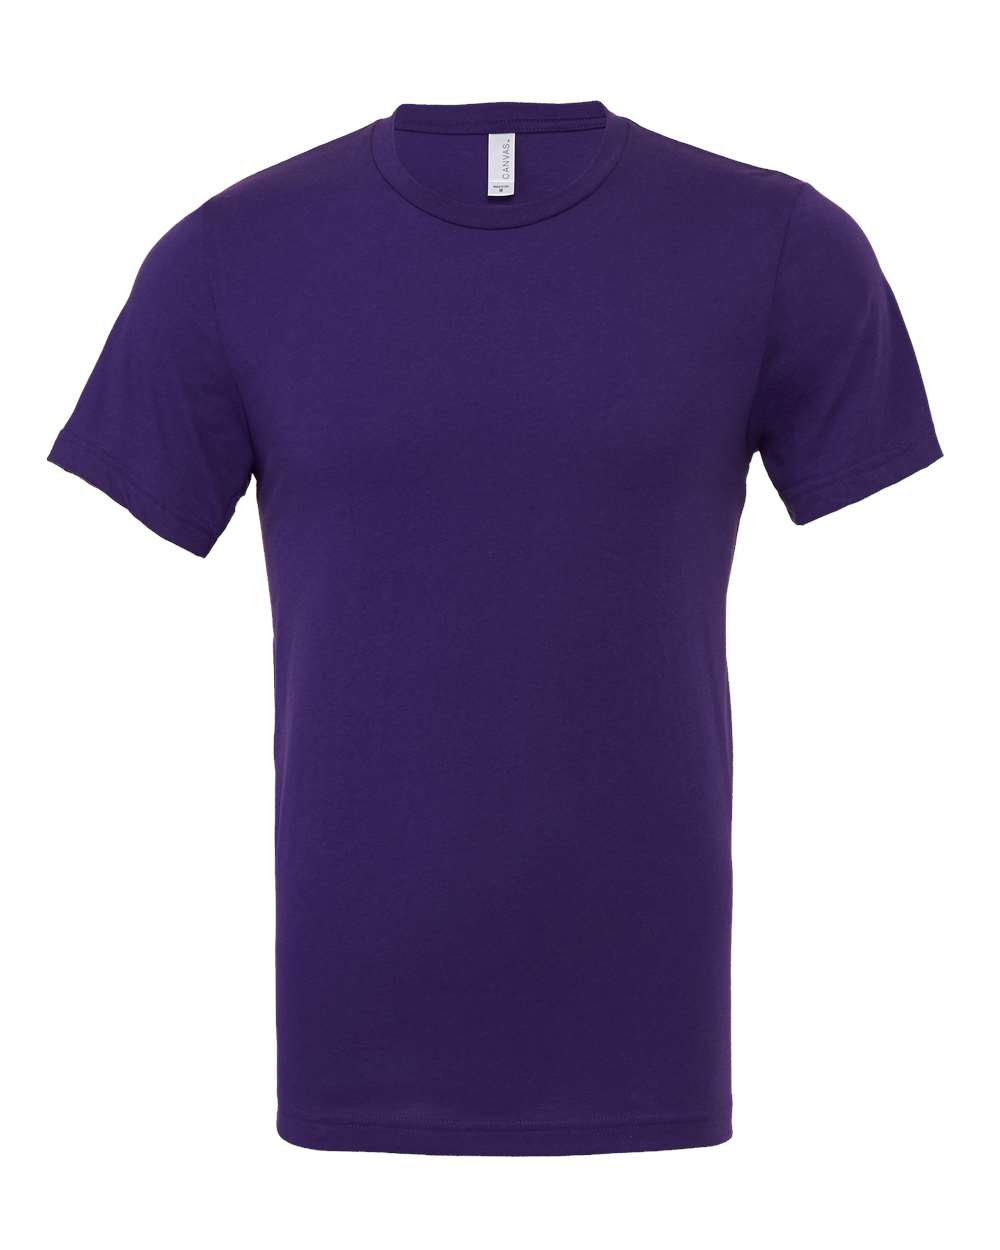 Order Custom Shirts - ShirtLaunch